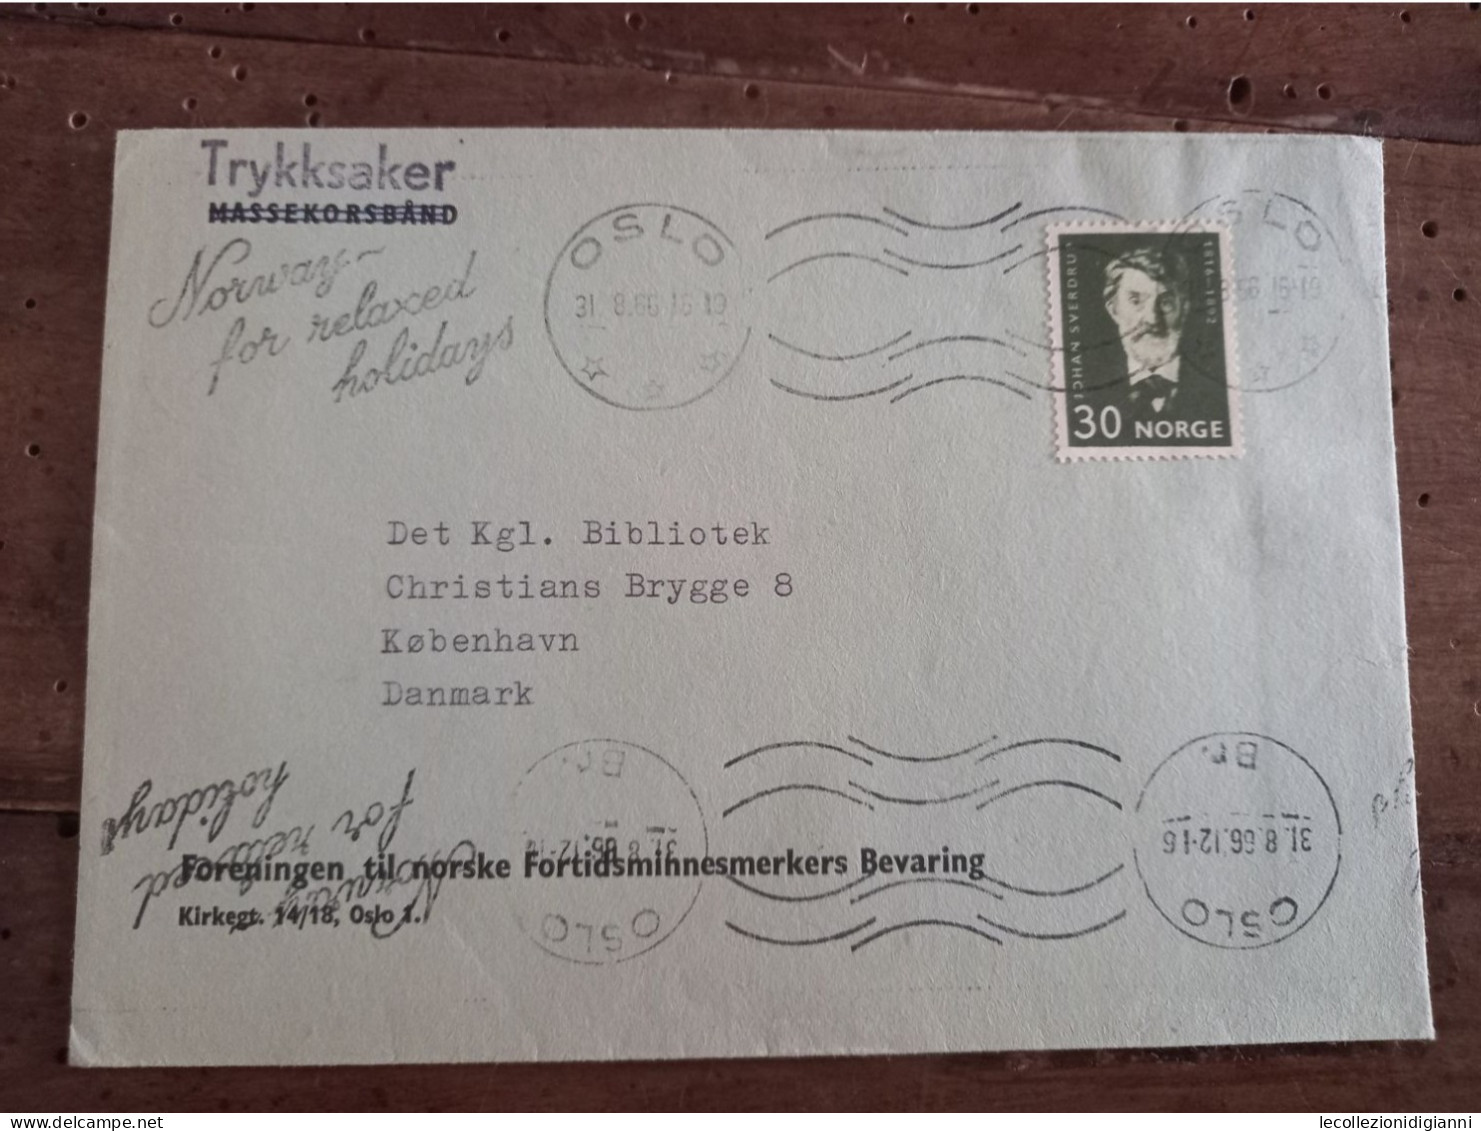 838) Norge Busta Stampe Trykksaker 1966 Viaggiata Da Oslo A Copenaghen Timbro Pubblicità Norway For Relaxed Holidays - Briefe U. Dokumente